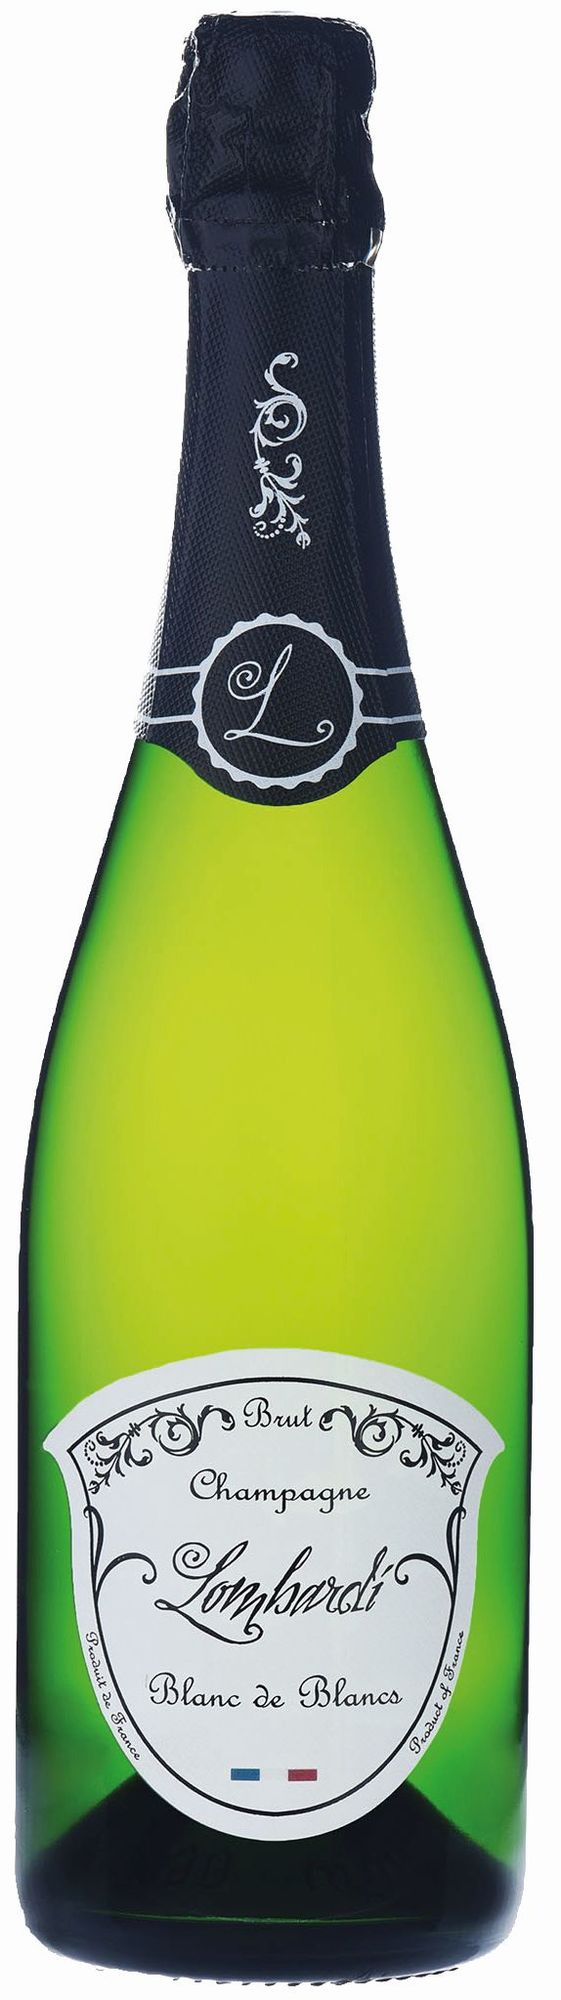 Champagne Lombardi Blanc de Blancs Brut Champagner, 0,75Ltr